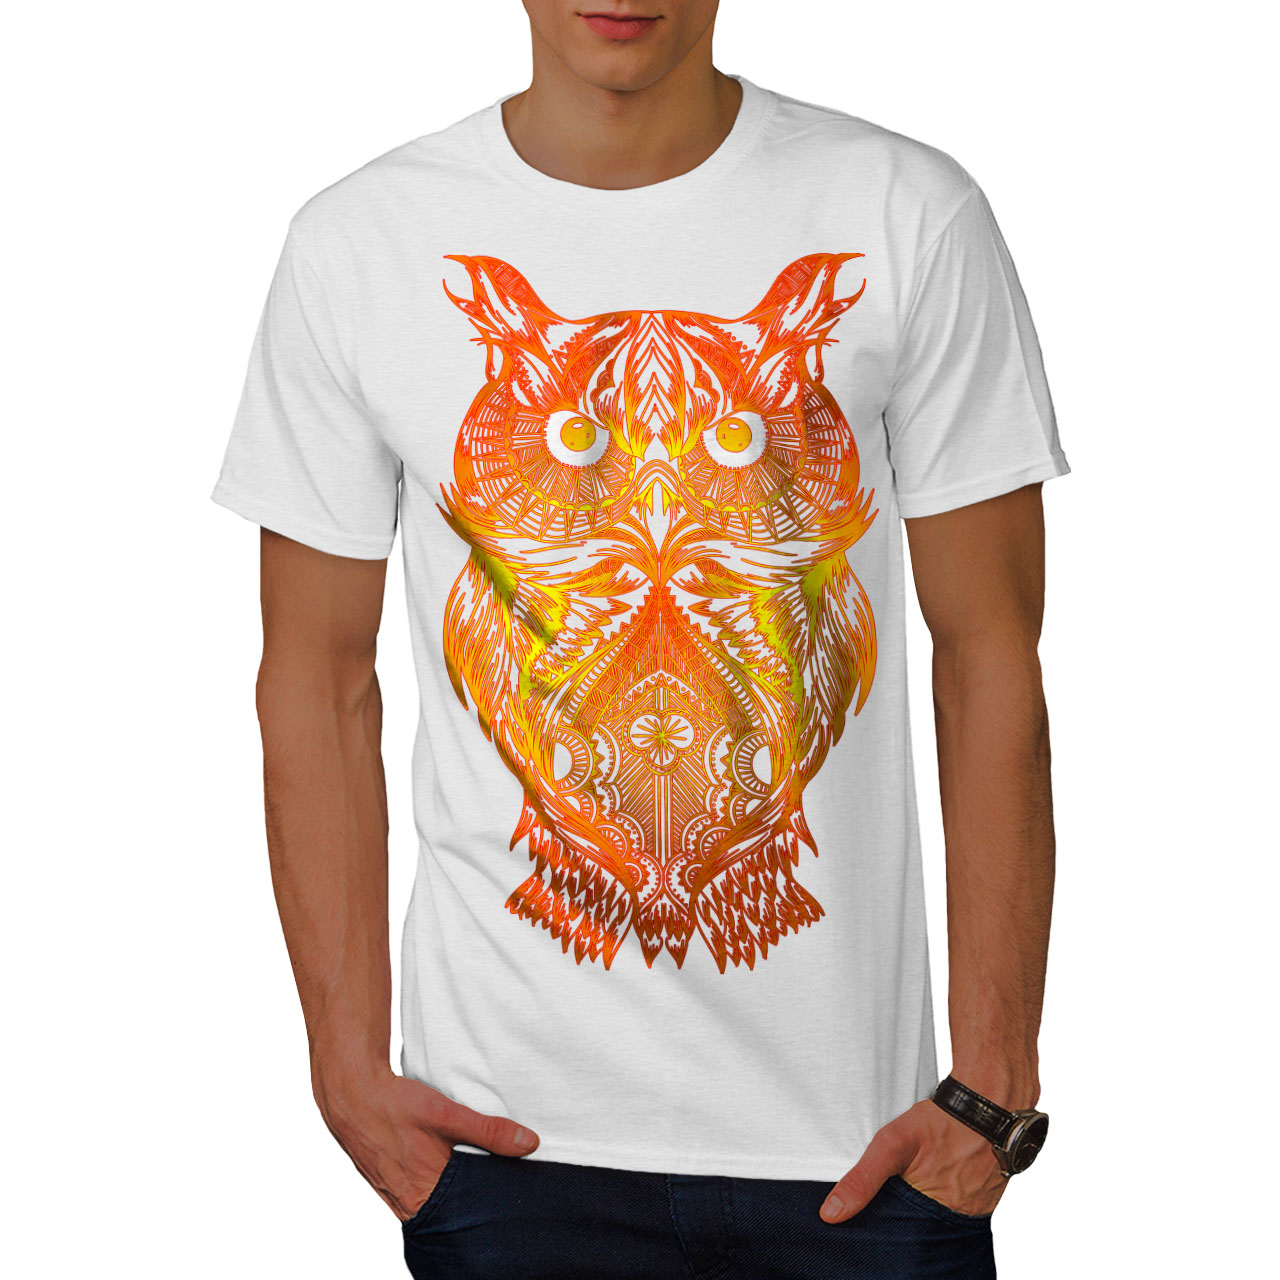 thumbnail 9  - Wellcoda Night Owl On Fire Mens T-shirt, Burning Graphic Design Printed Tee